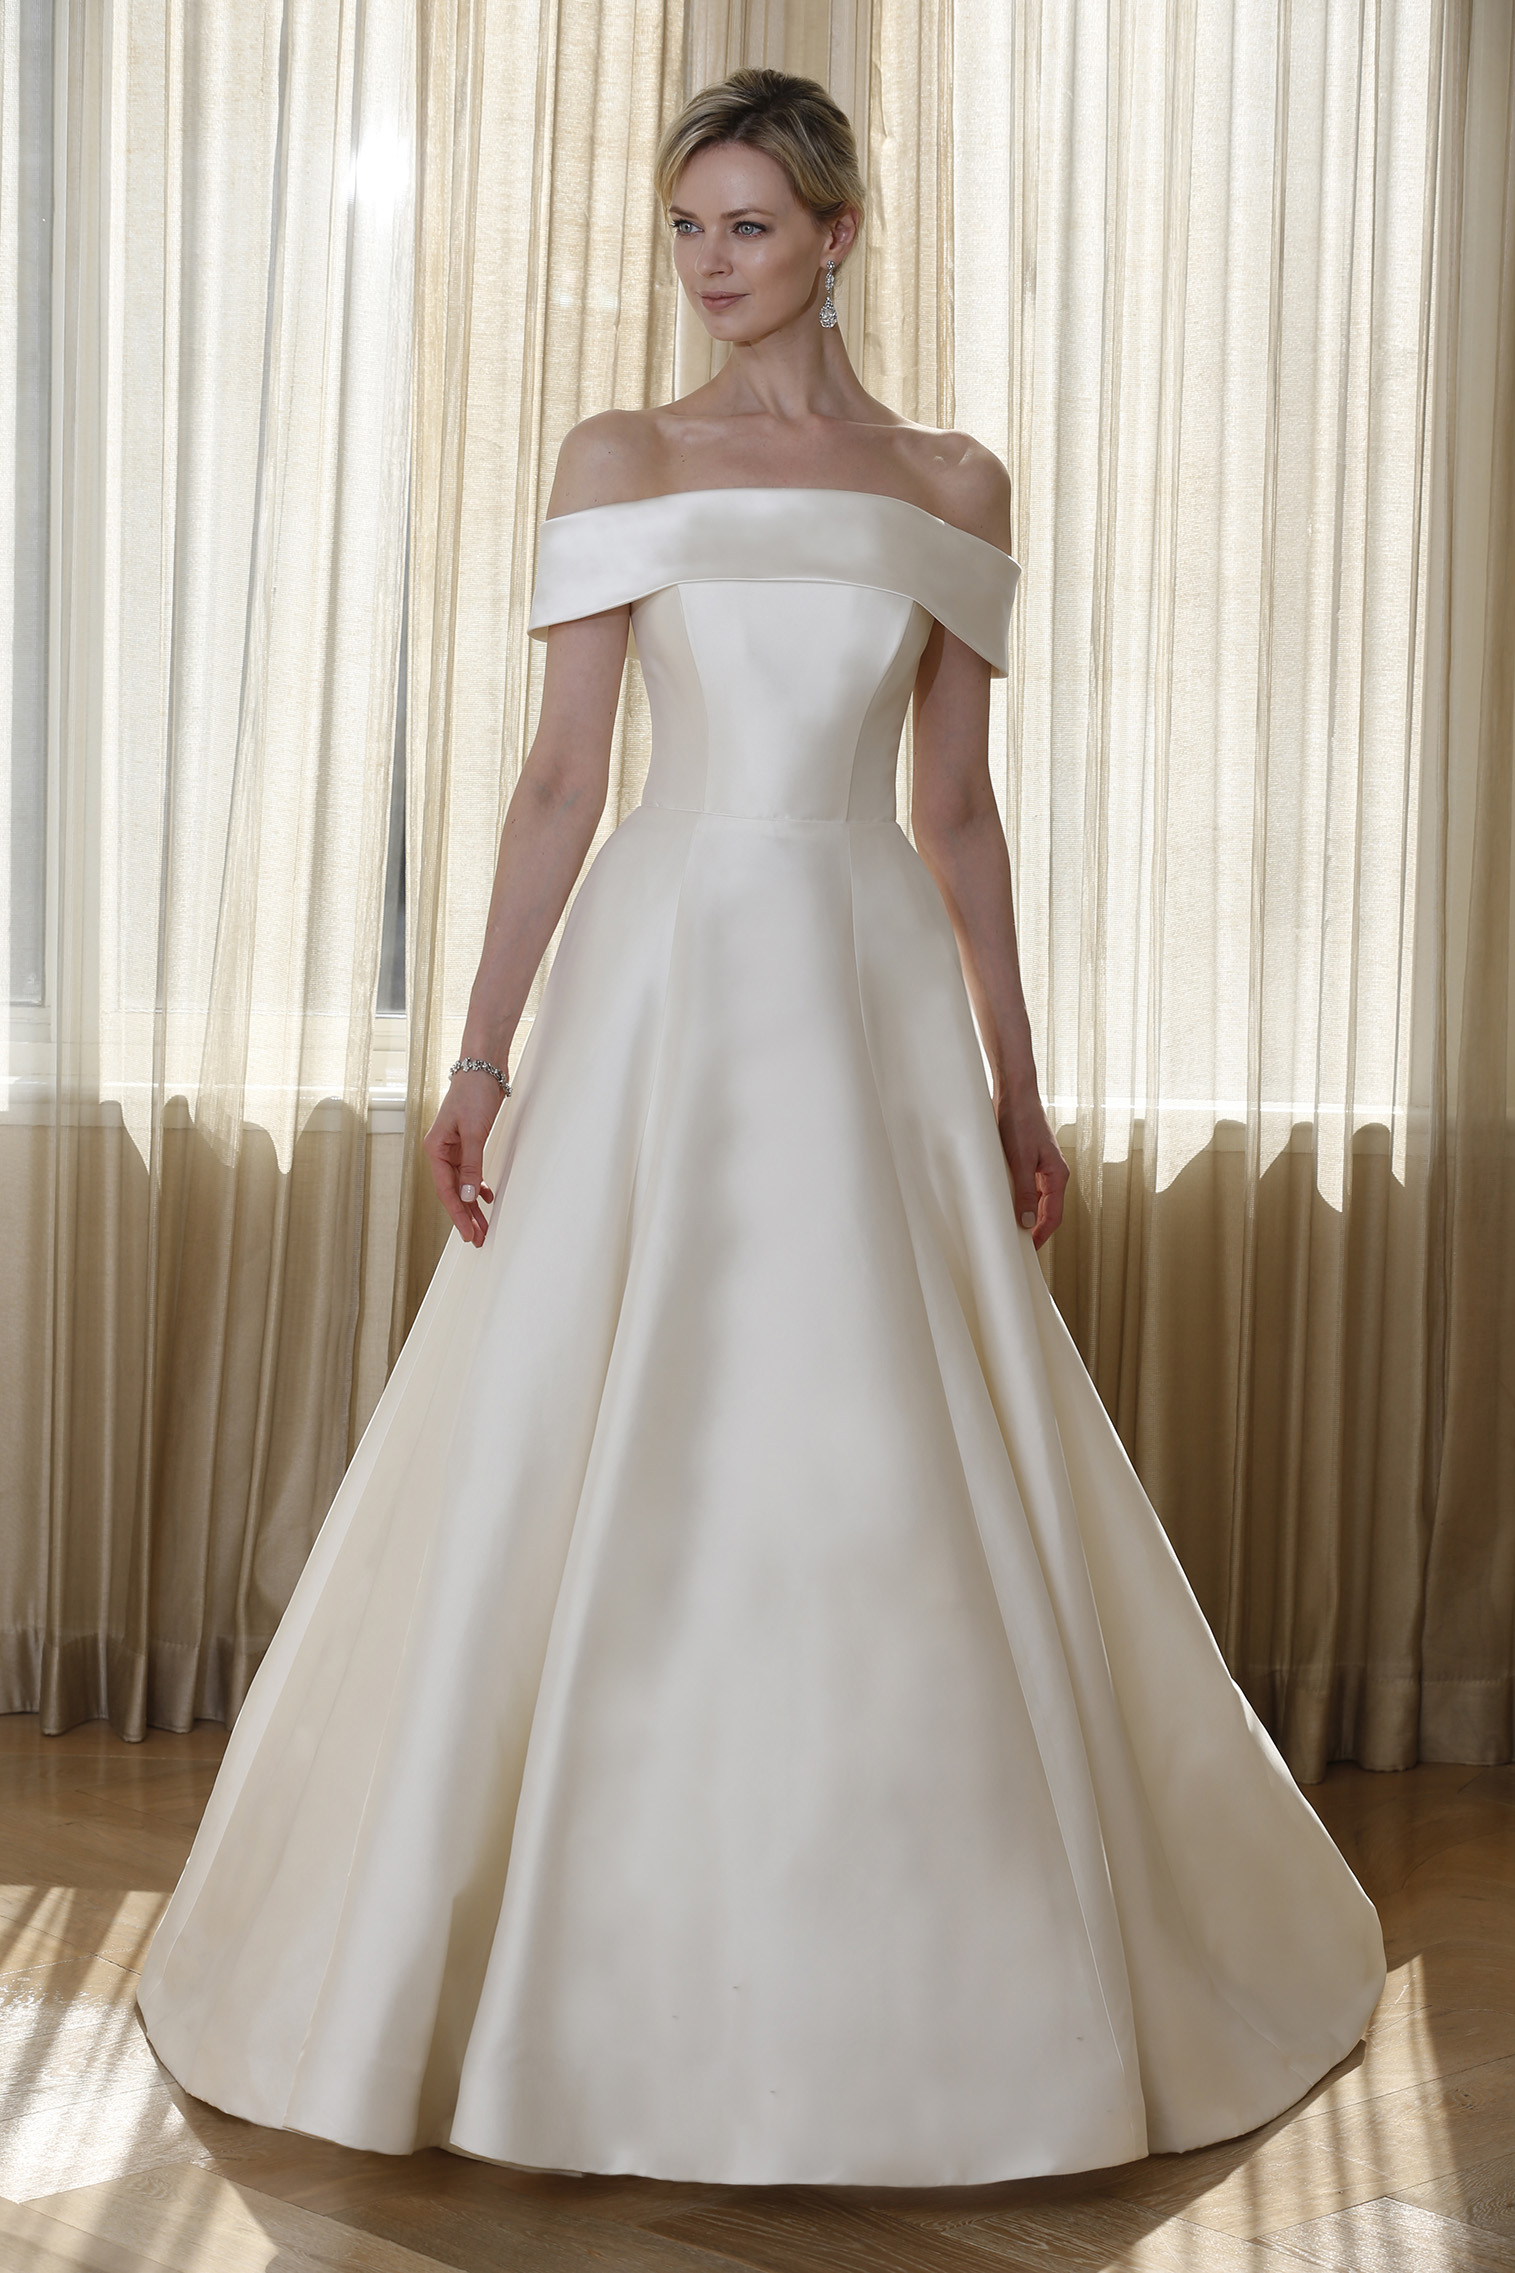 Royal Wedding gown inspiration by Caroline Castigliano